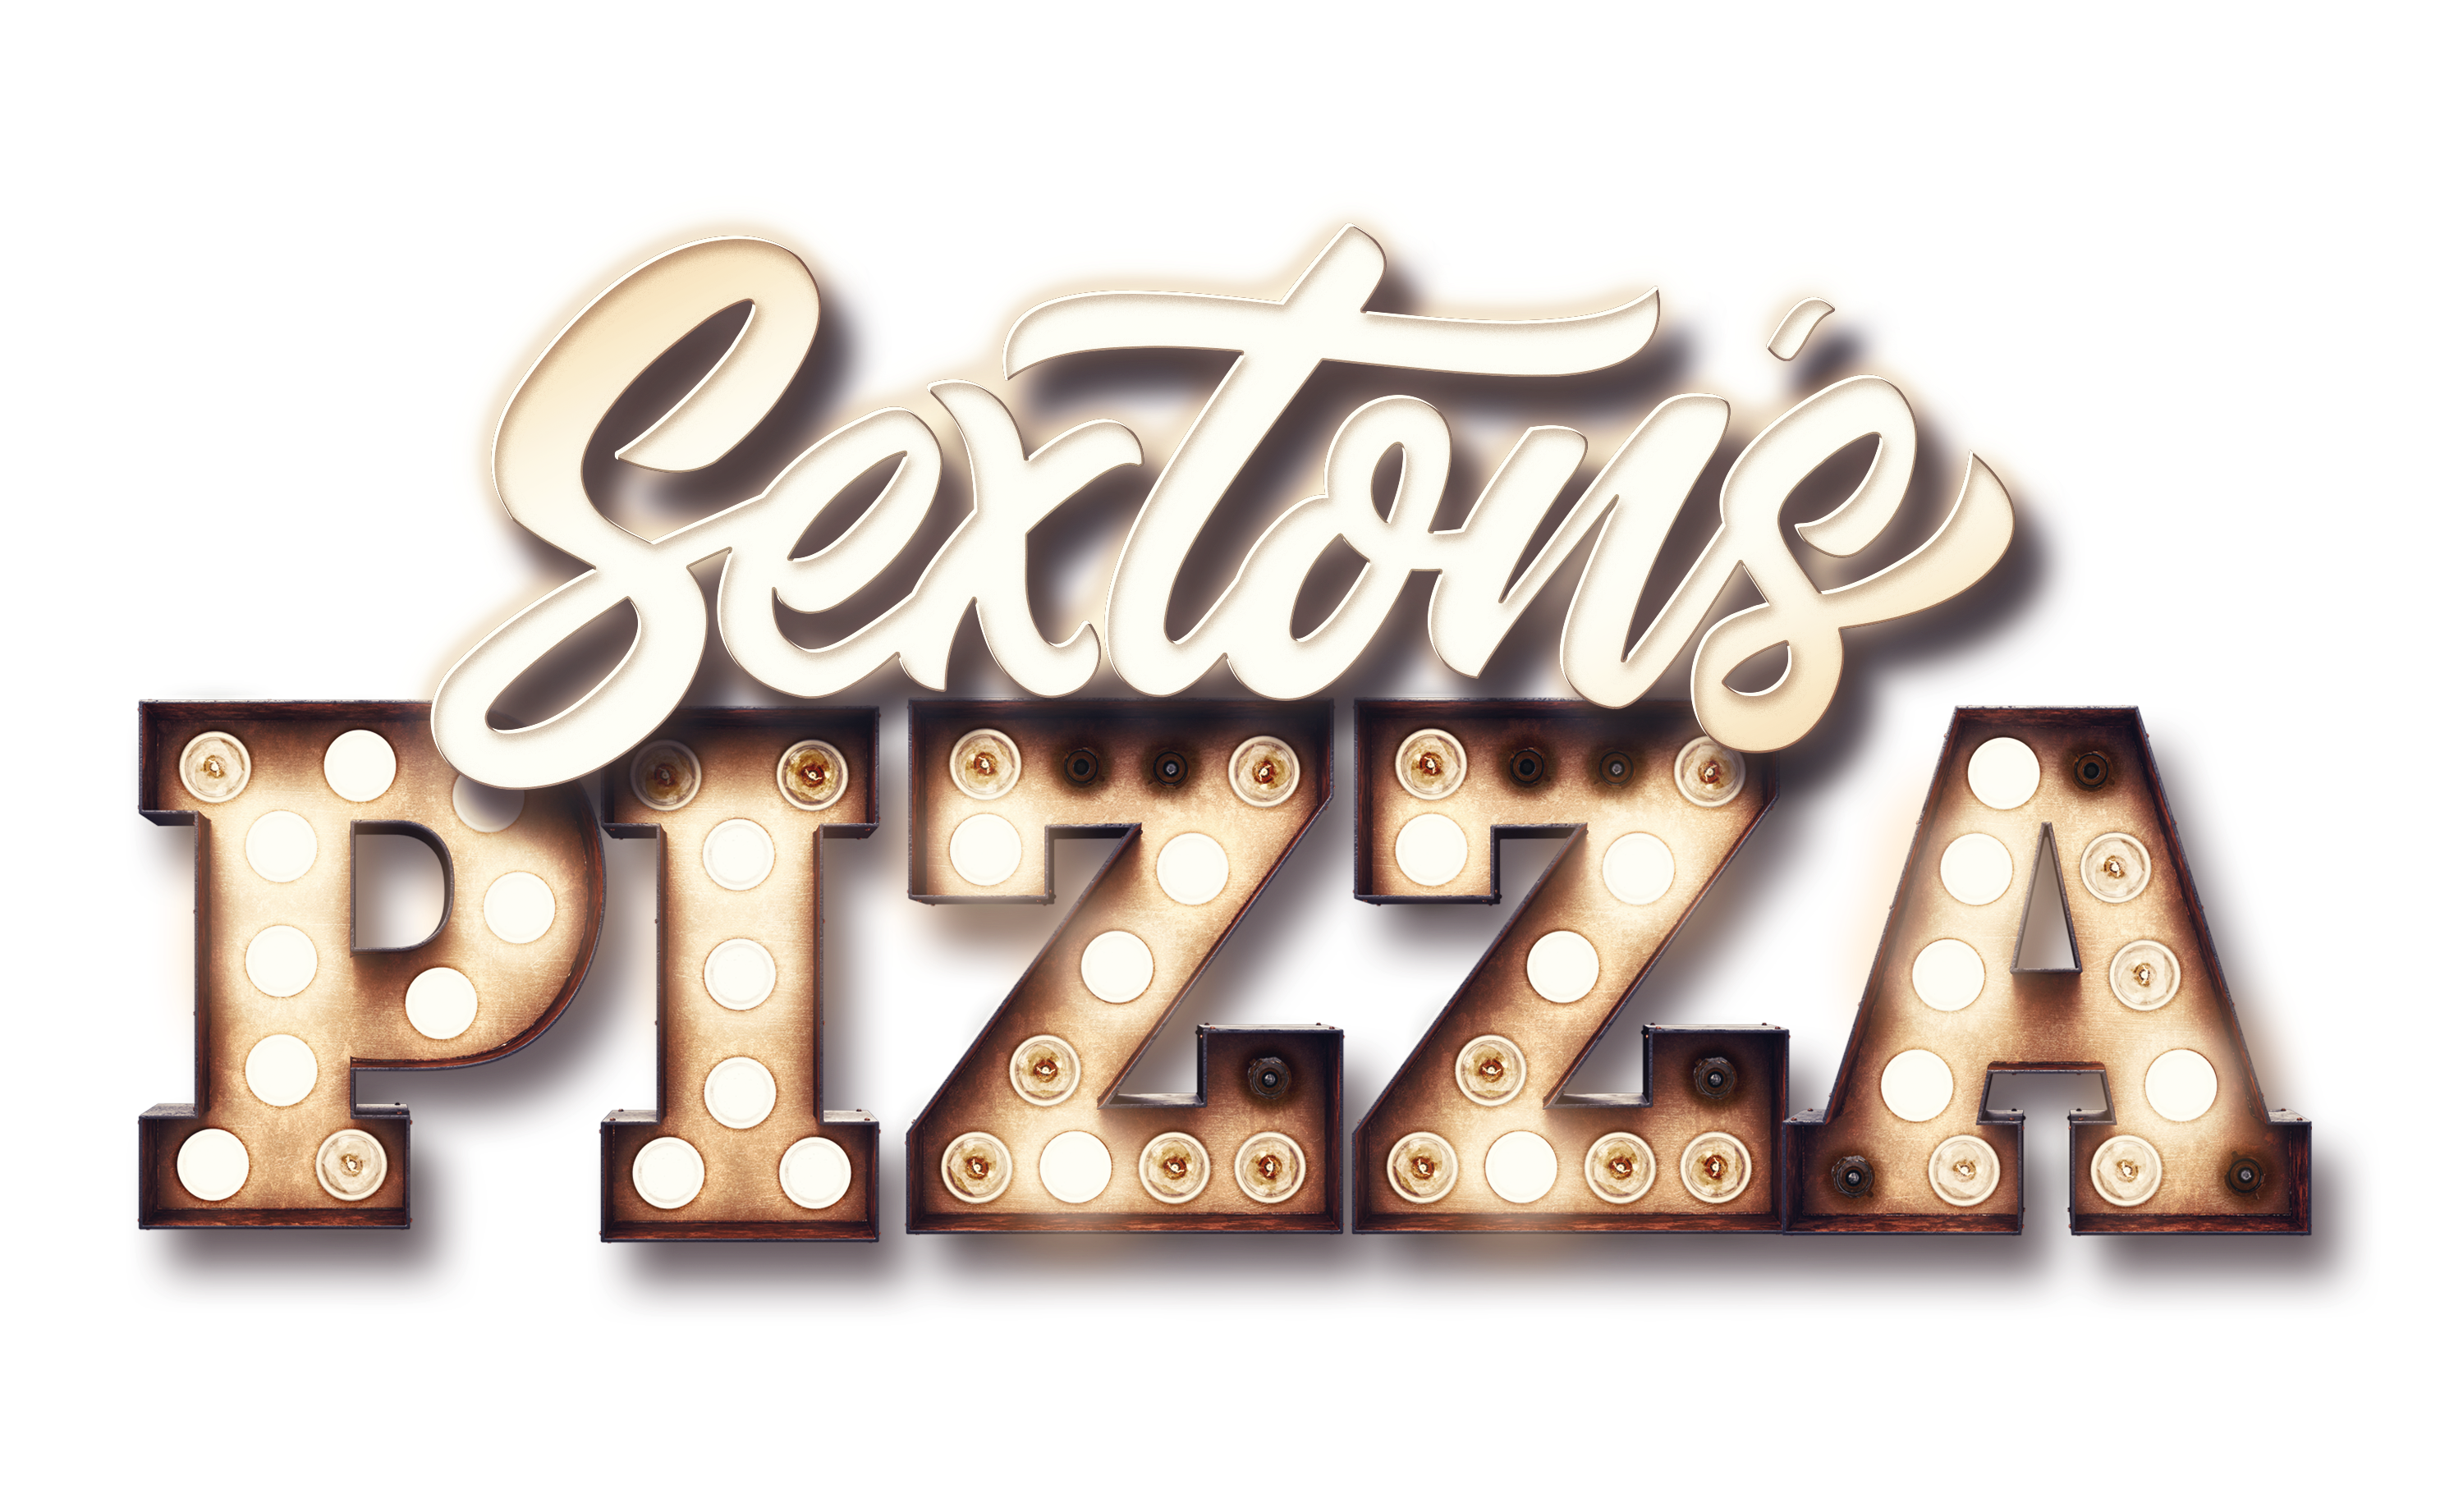 Sextons Pizza